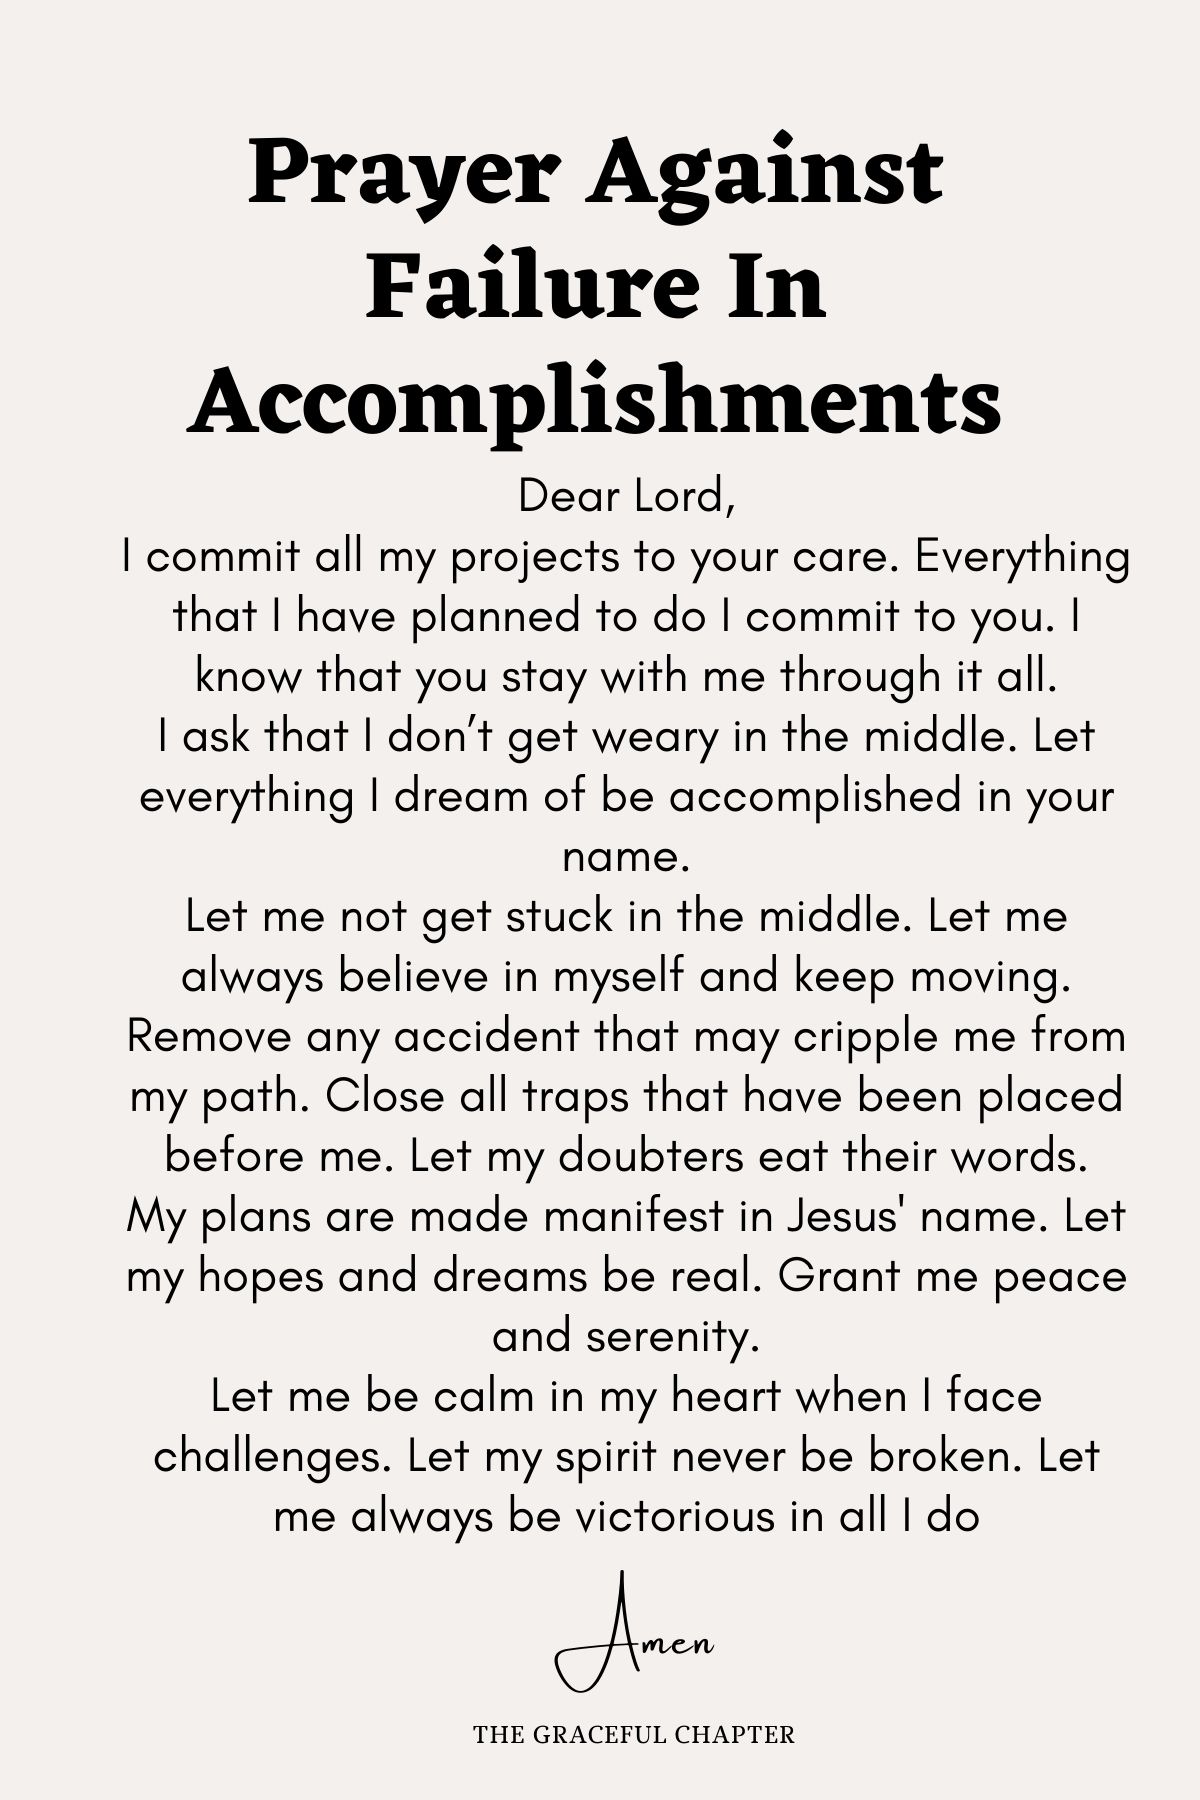 Prayer against failure in accomplishments